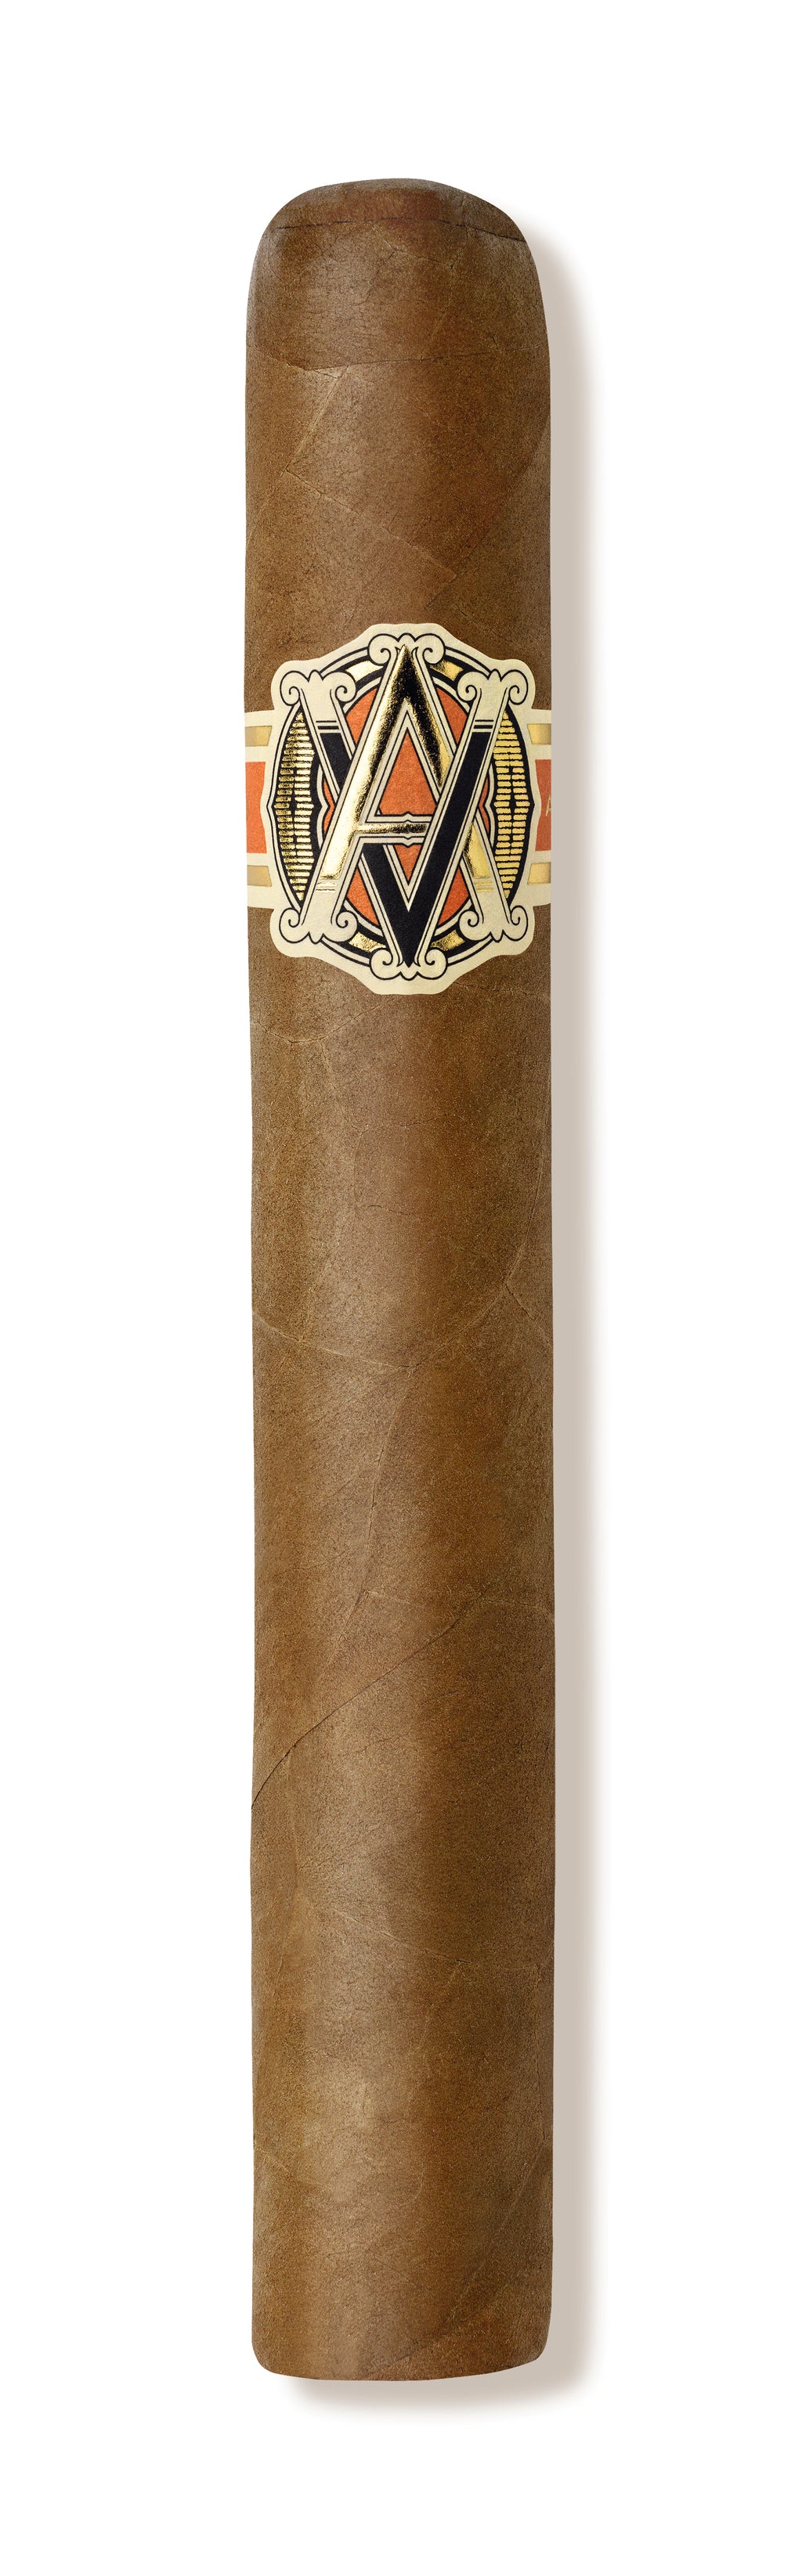 Avo Cigars XO Legato Featured Image